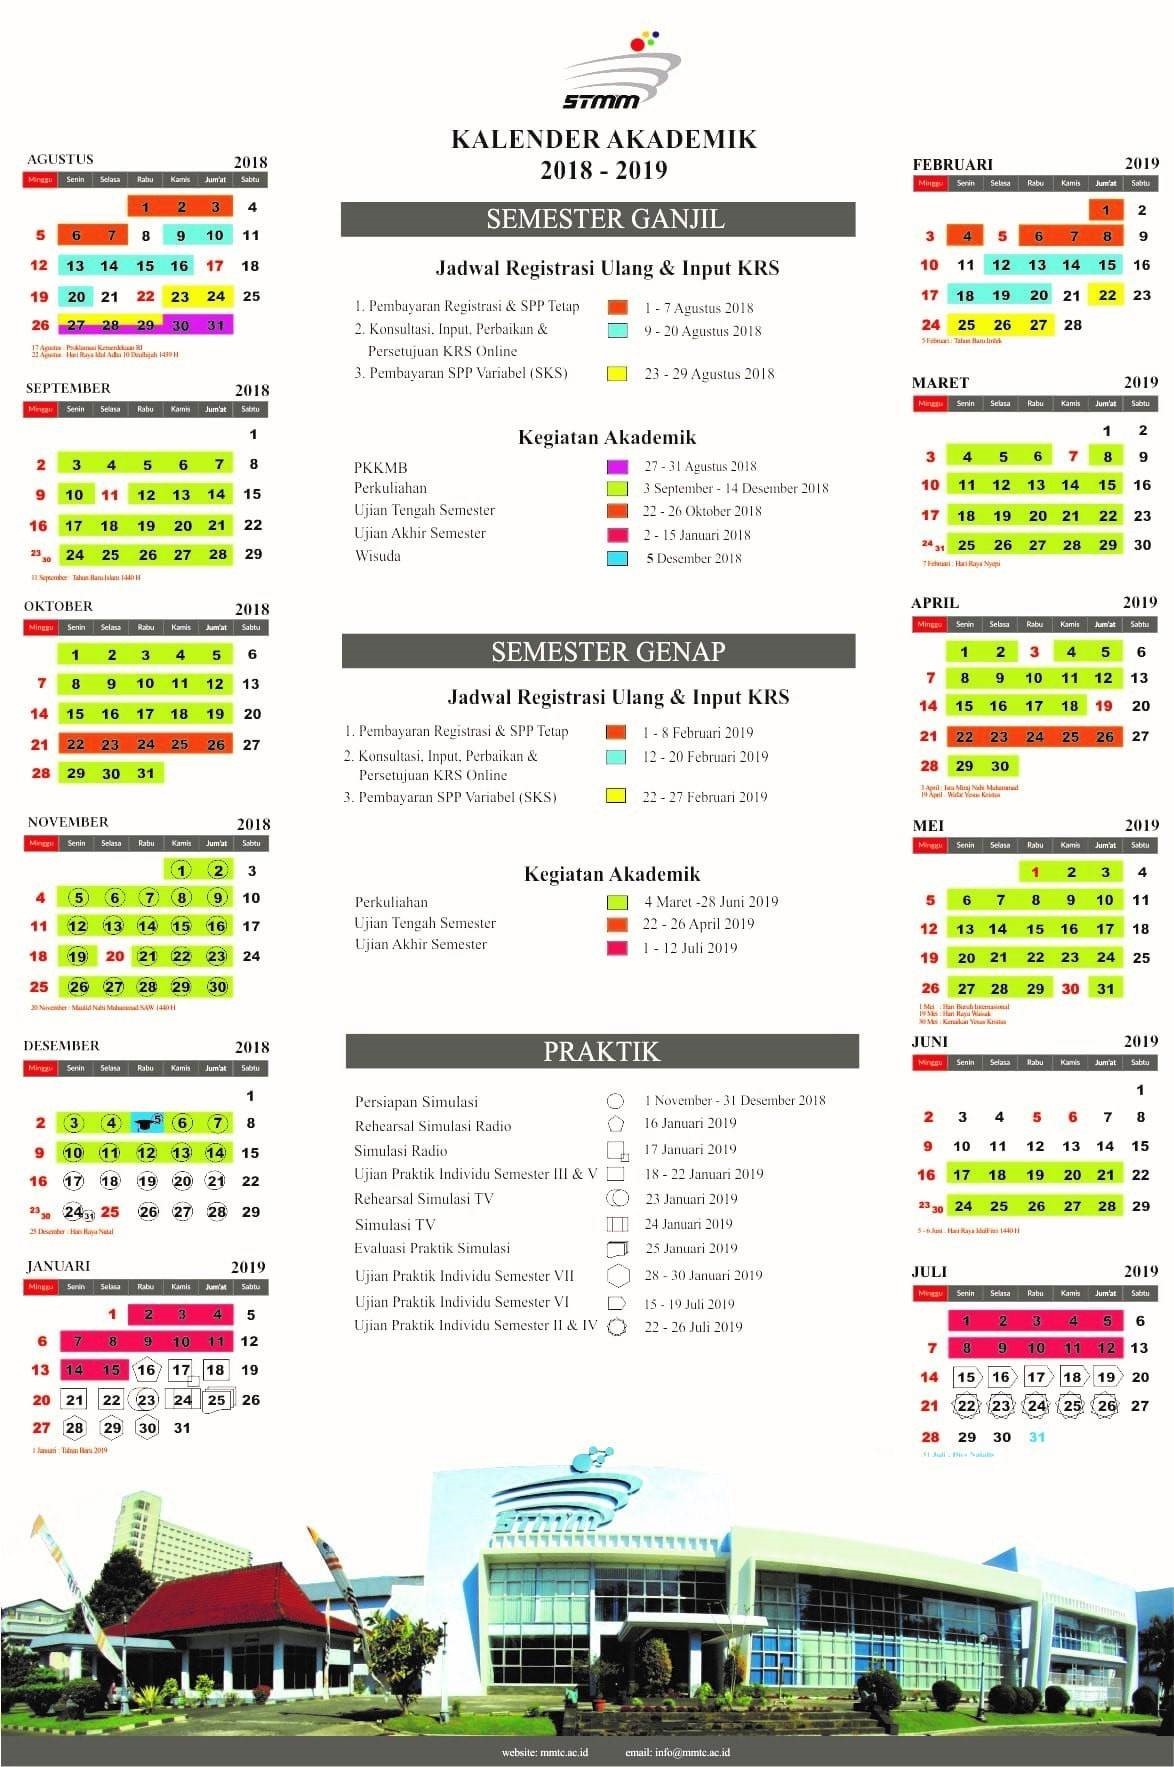 Kalender Akademik STMM 2018 2019